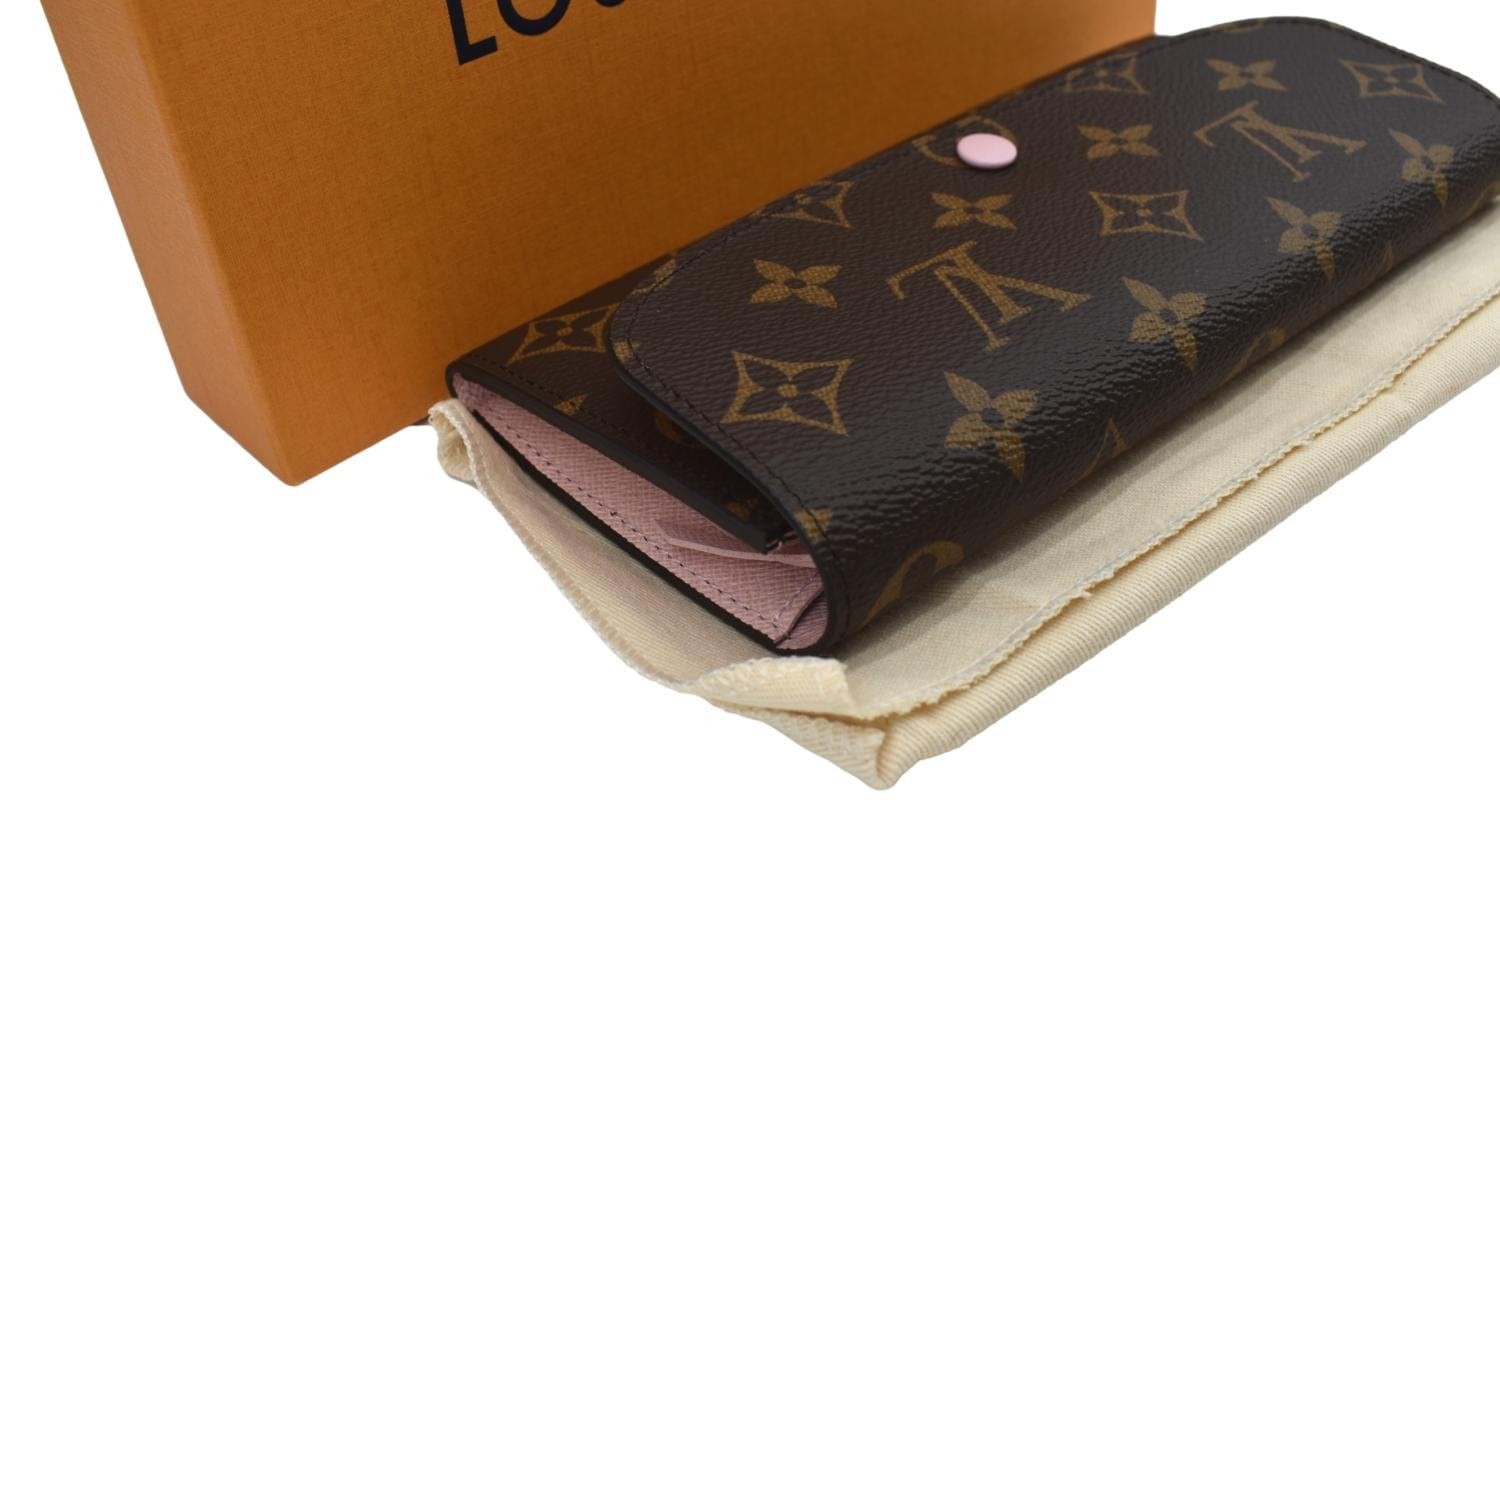 Louis Vuitton Emilie Monogram Wallet Rose Ballerine